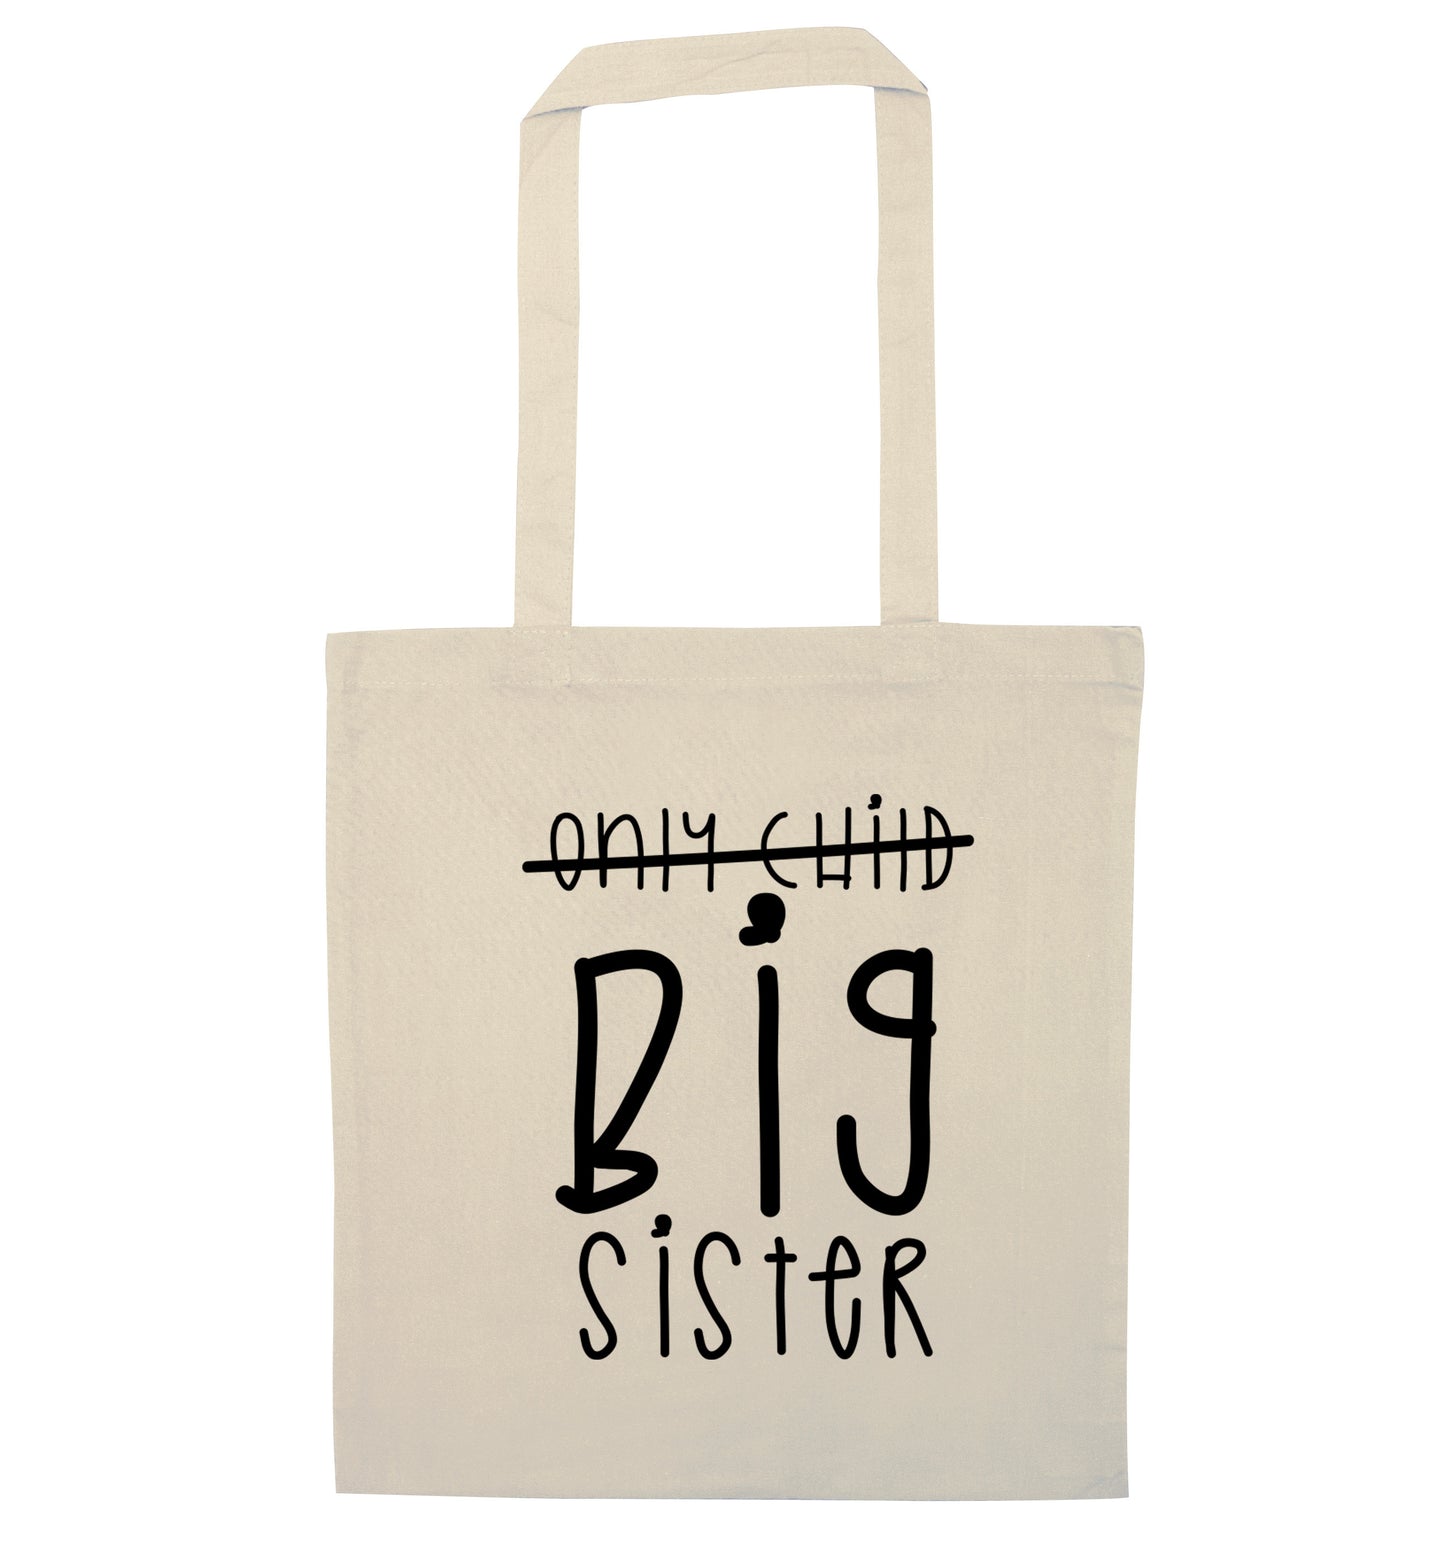 Only child big sister natural tote bag